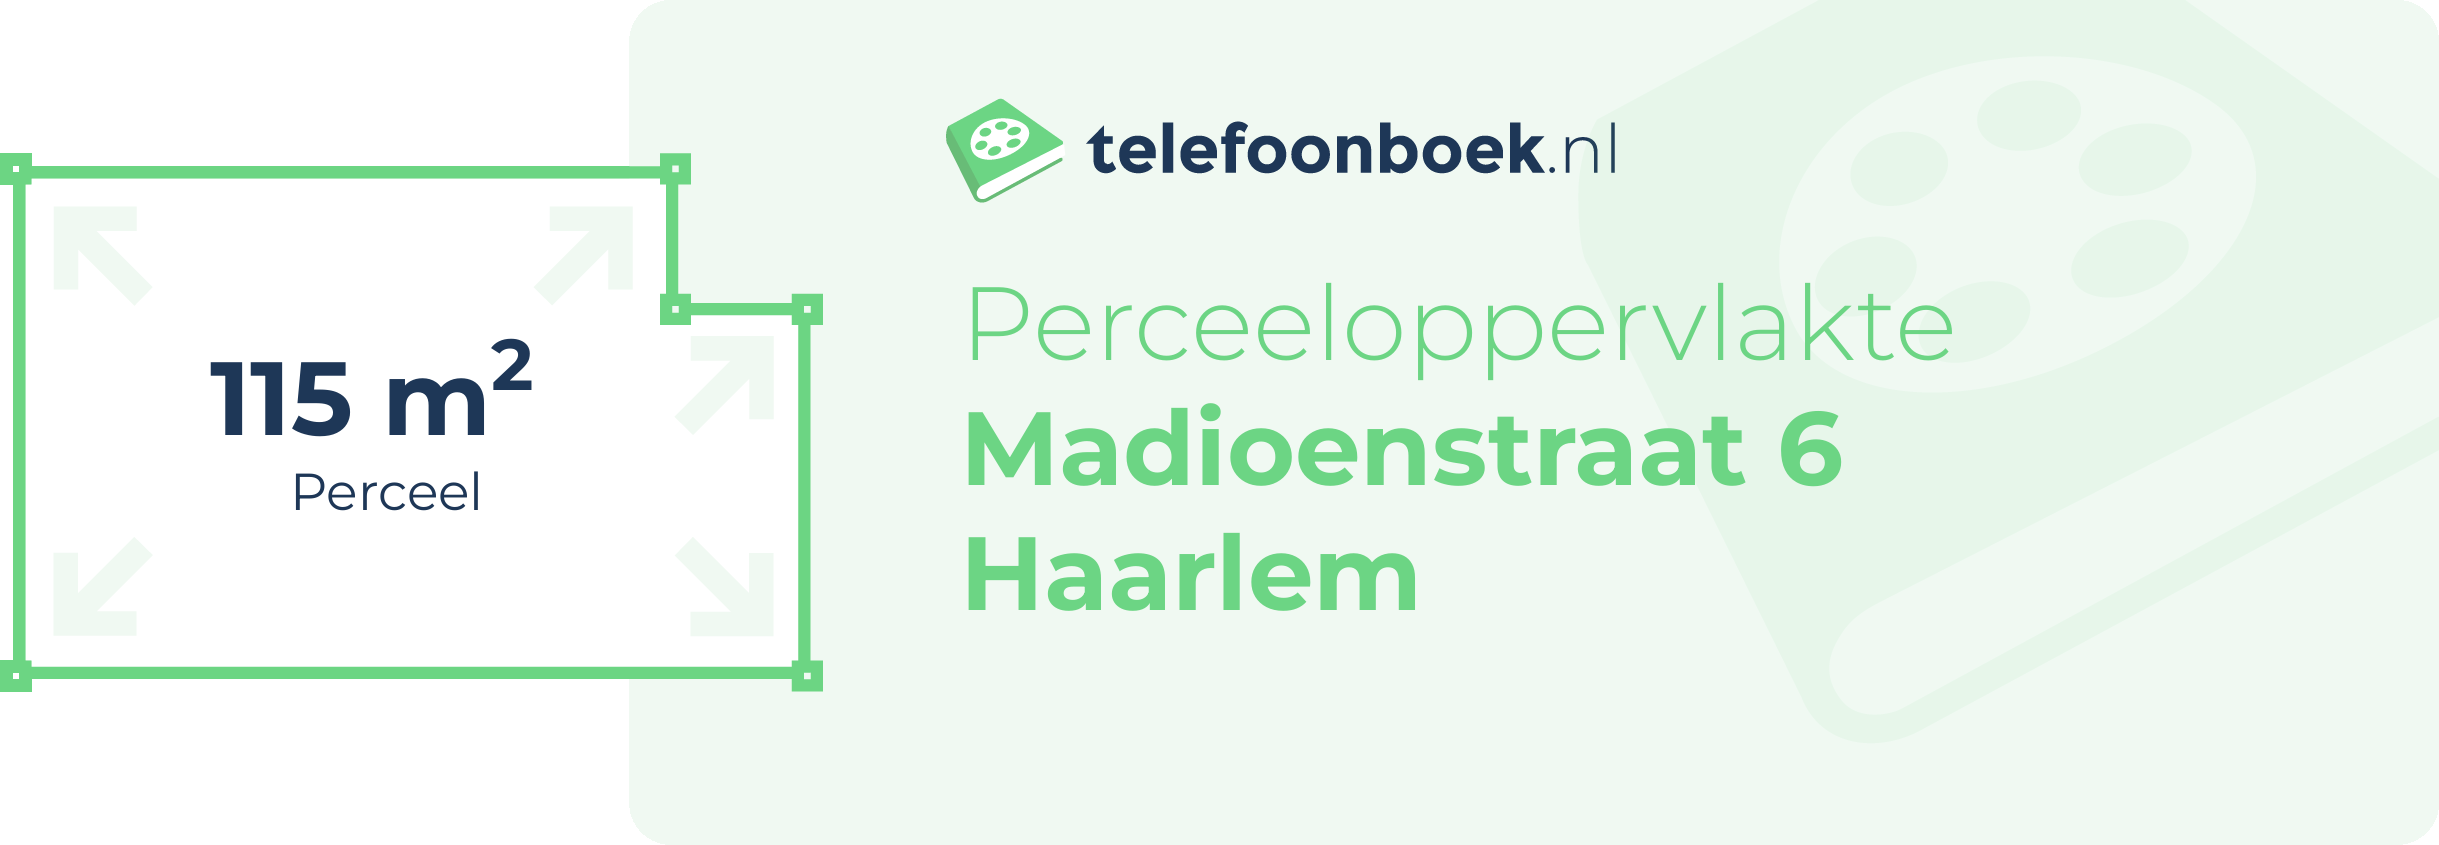 Perceeloppervlakte Madioenstraat 6 Haarlem